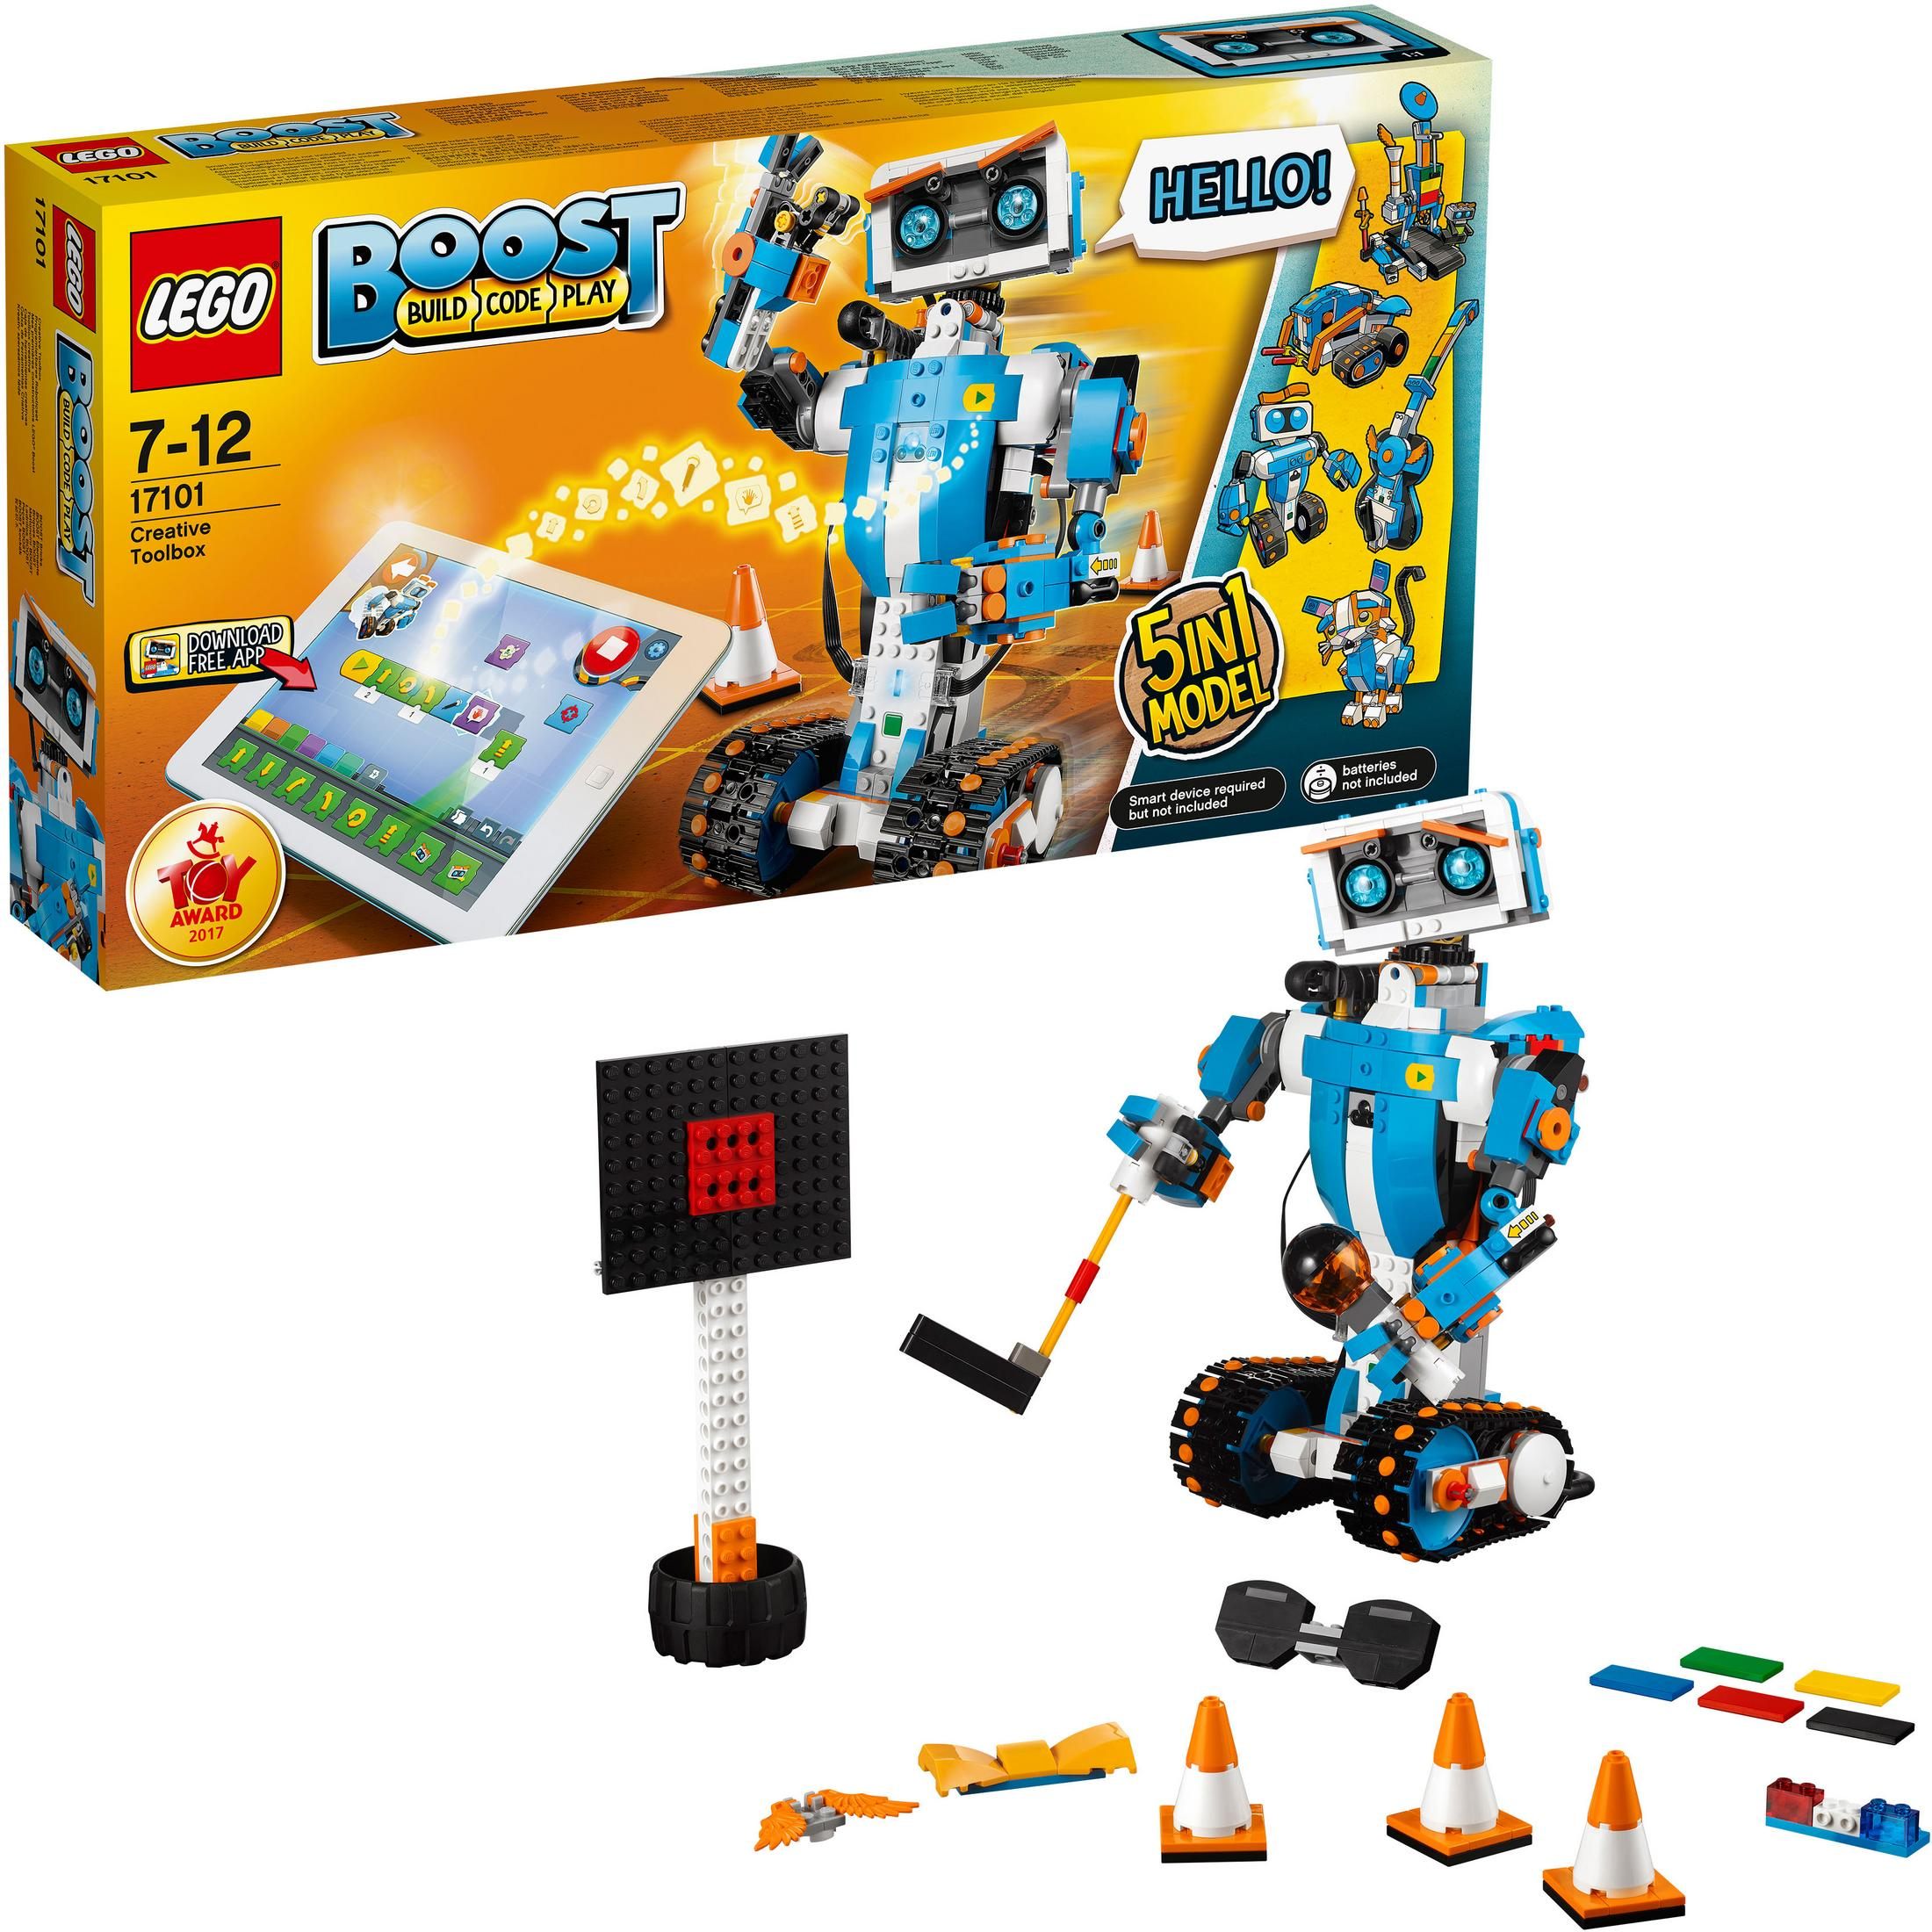 LEGO 17101 PROGRAMMIERBARES ROBOTICSET V29 Bausatz, Mehrfarbig